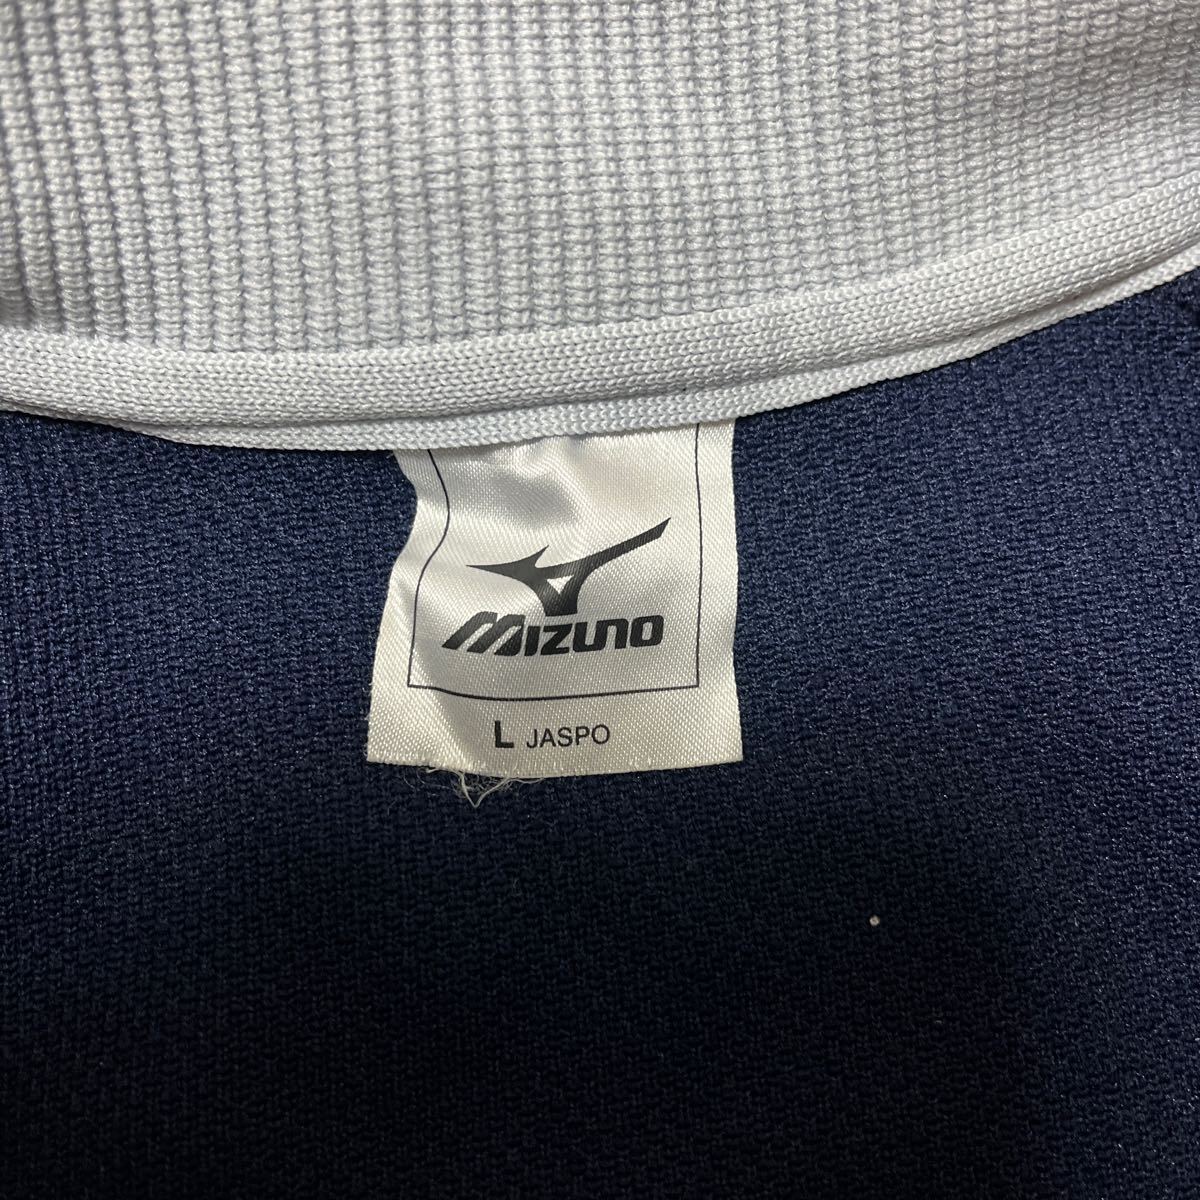 Mizuno Mizuno джерси спортивная куртка L размер темно-синий полиэстер 